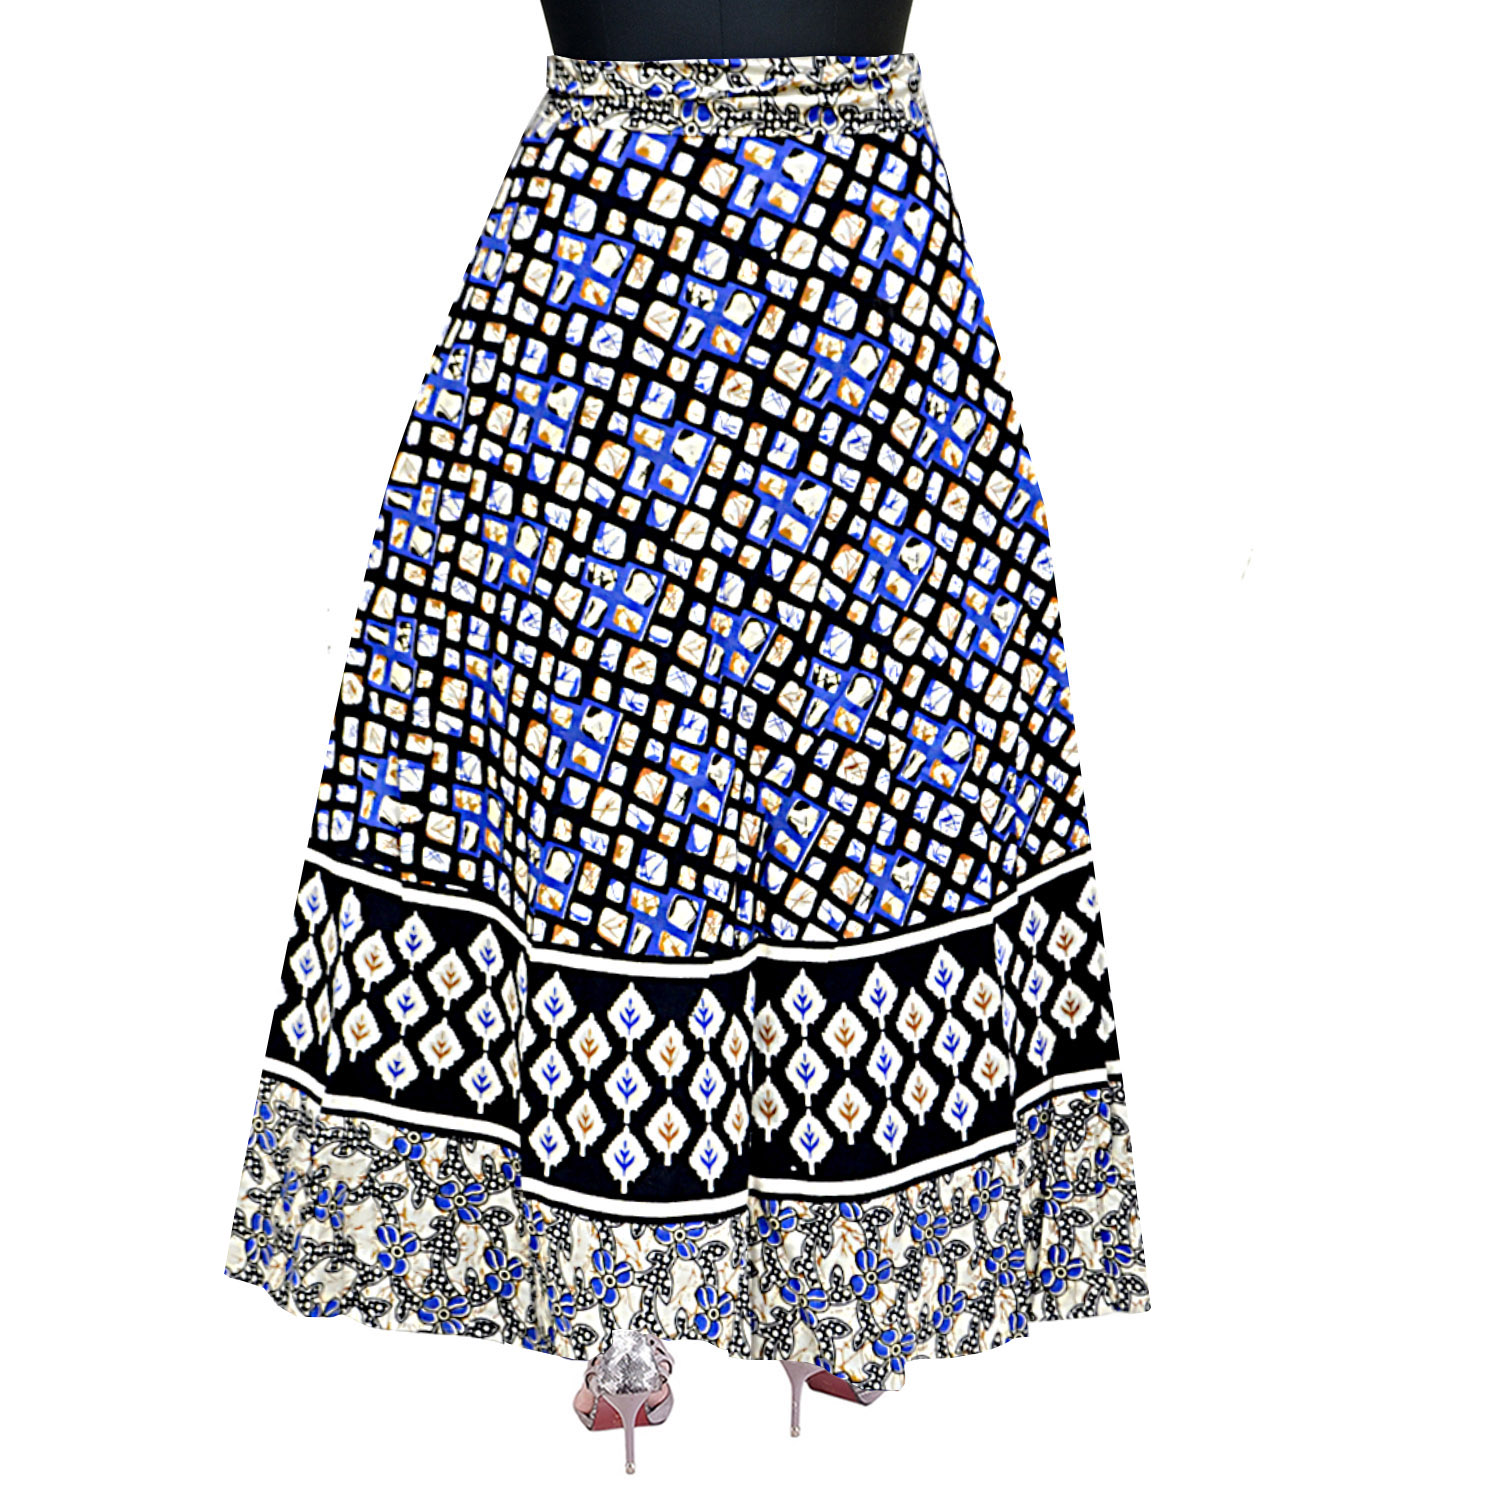 Mudrika Women's Cotton Skirt (Multicolor )